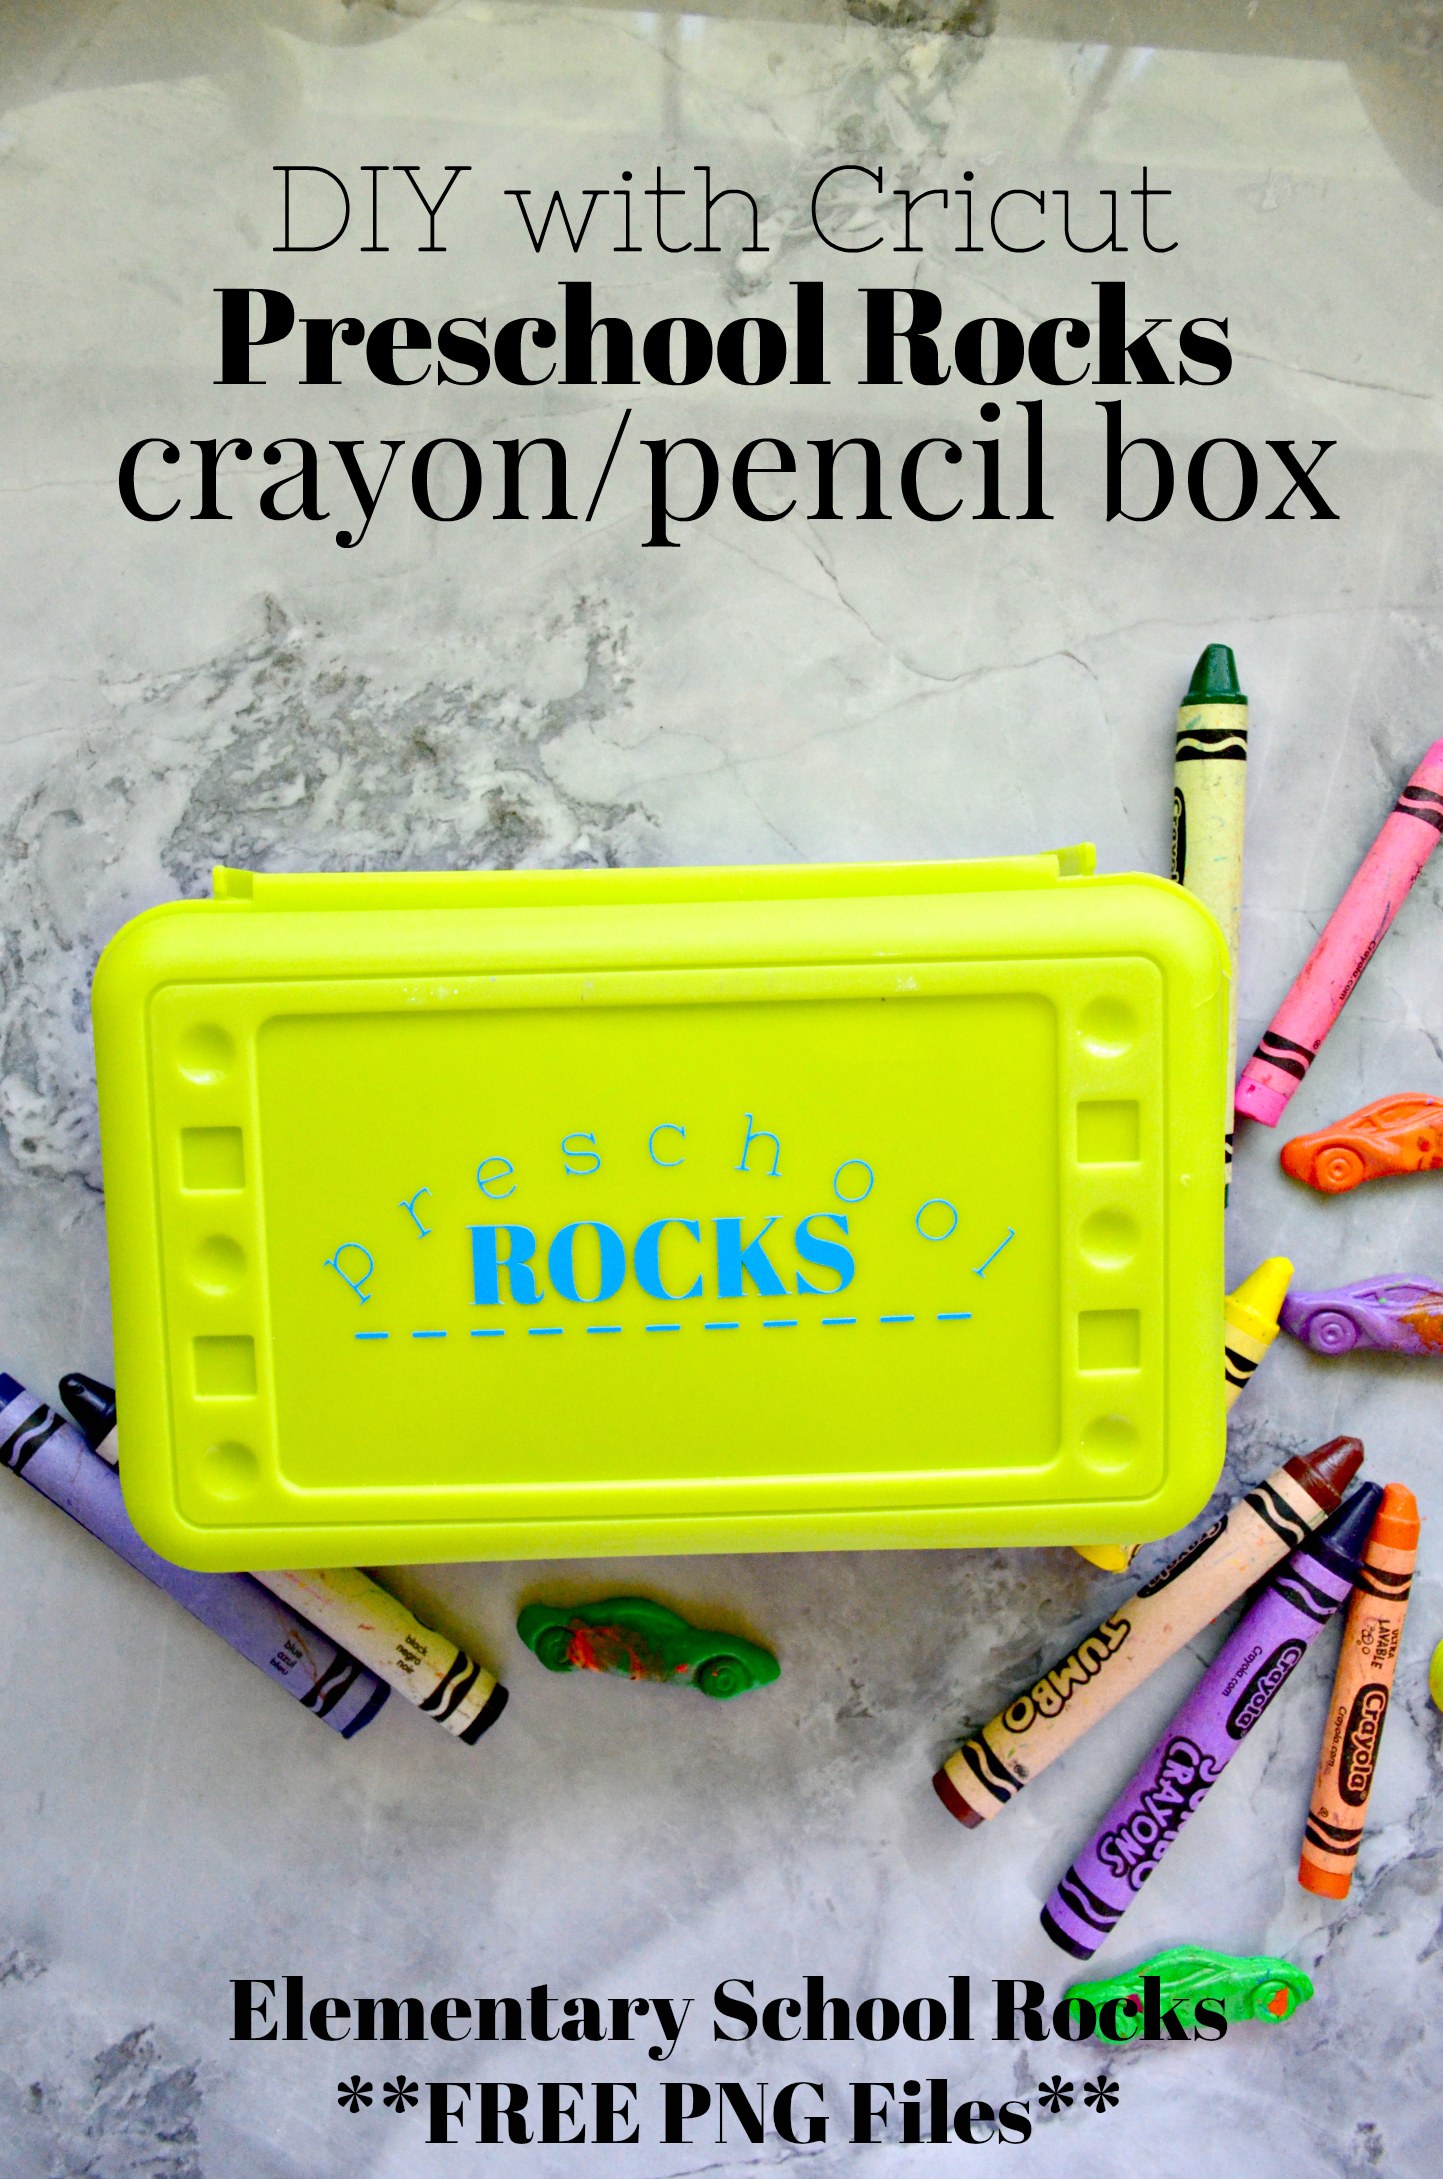 Crayon Rocks in a Box